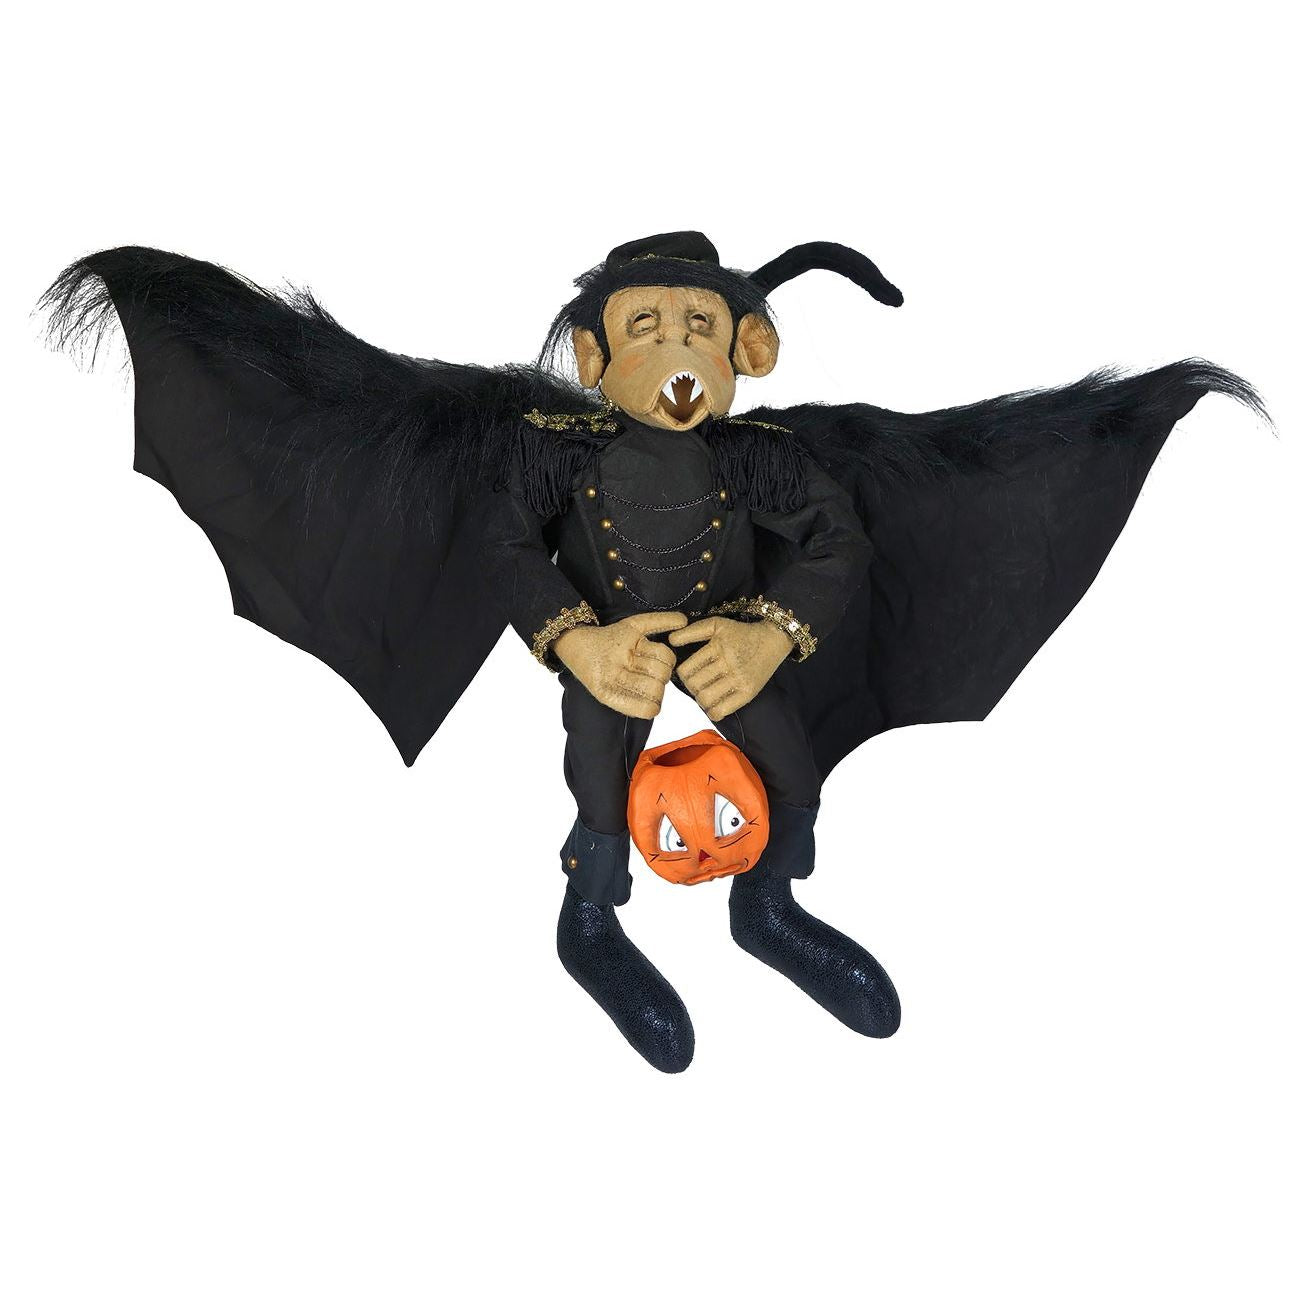  Gathered Traditions Macbeth Flying Monkey 24 Doll Halloween  Joe Spencer : Home & Kitchen